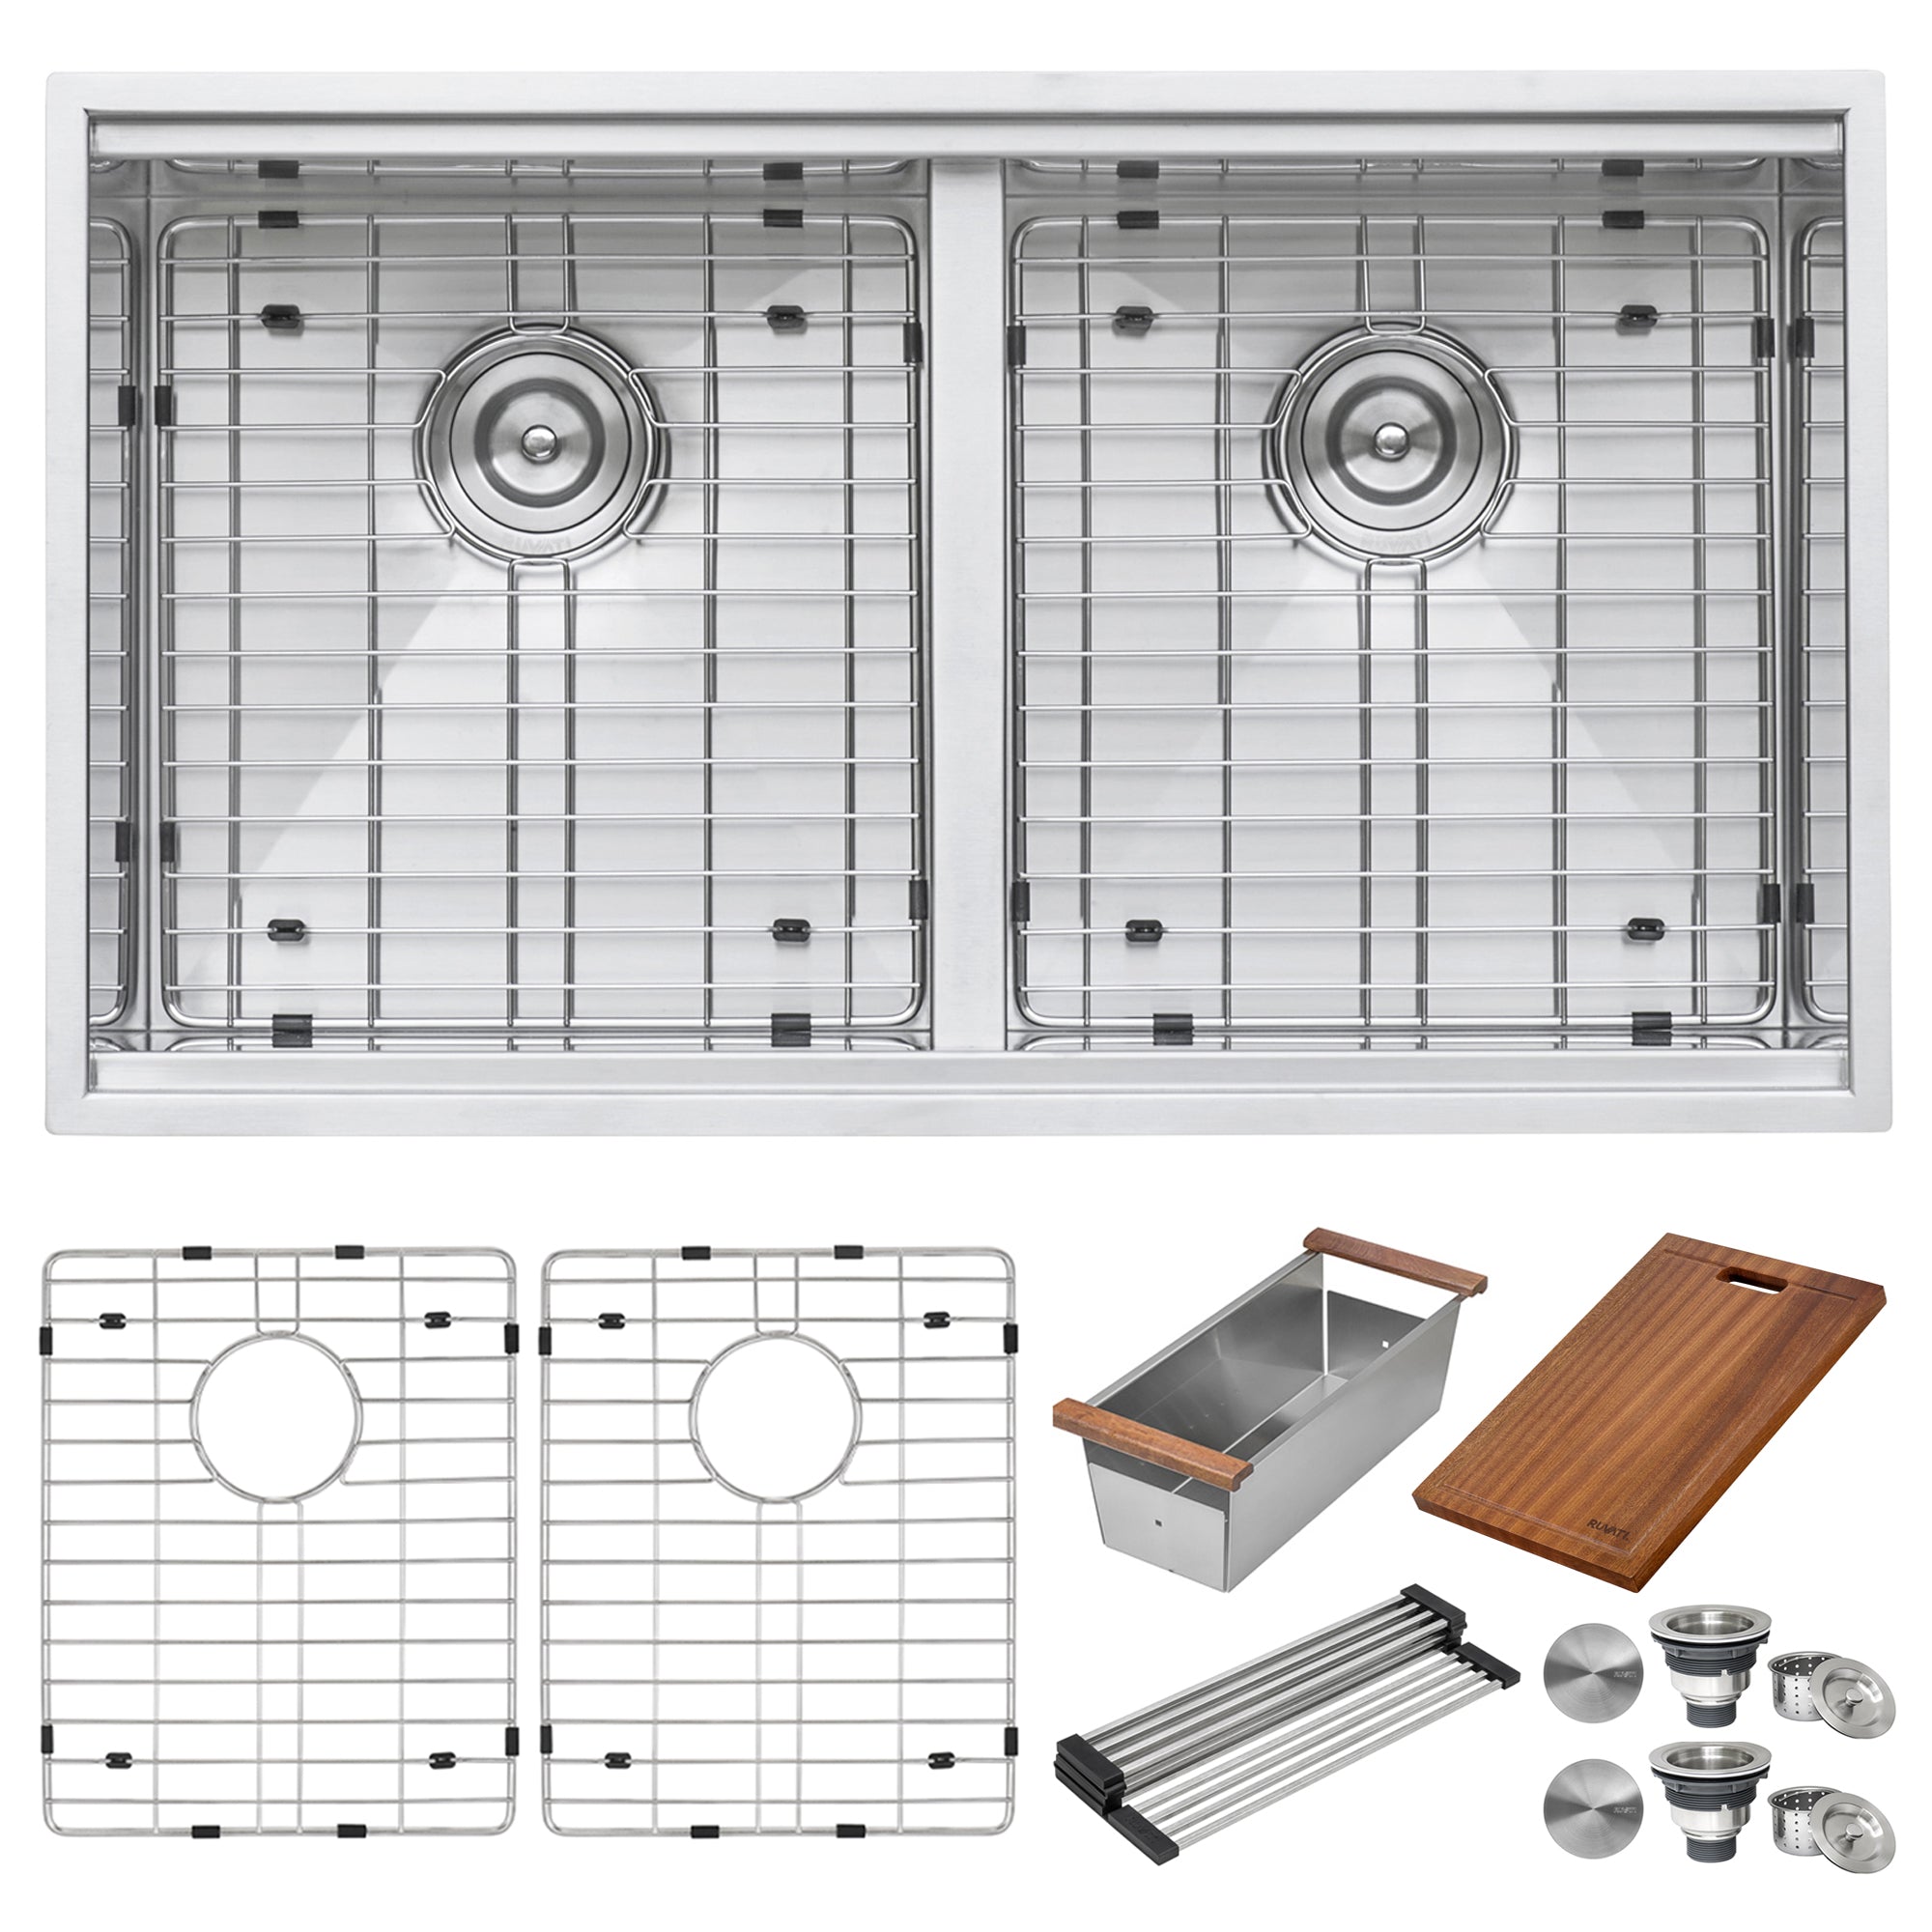 Ruvati Workstation Ledge 50/50 Double Bowl Undermount 16 Gauge Stainless Steel Kitchen Sink